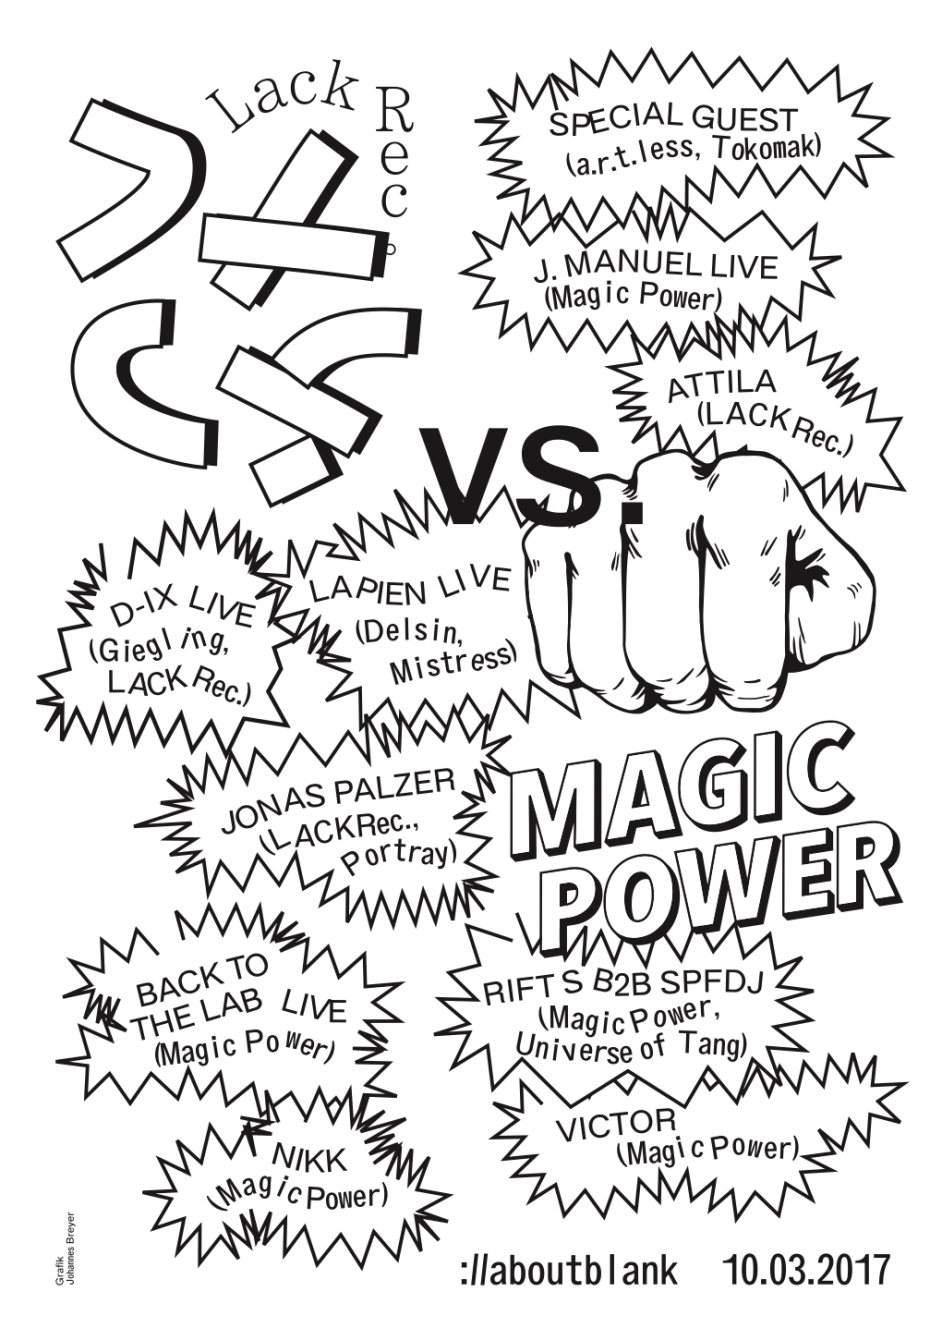 Lackrec vs. Magic Power - フライヤー裏